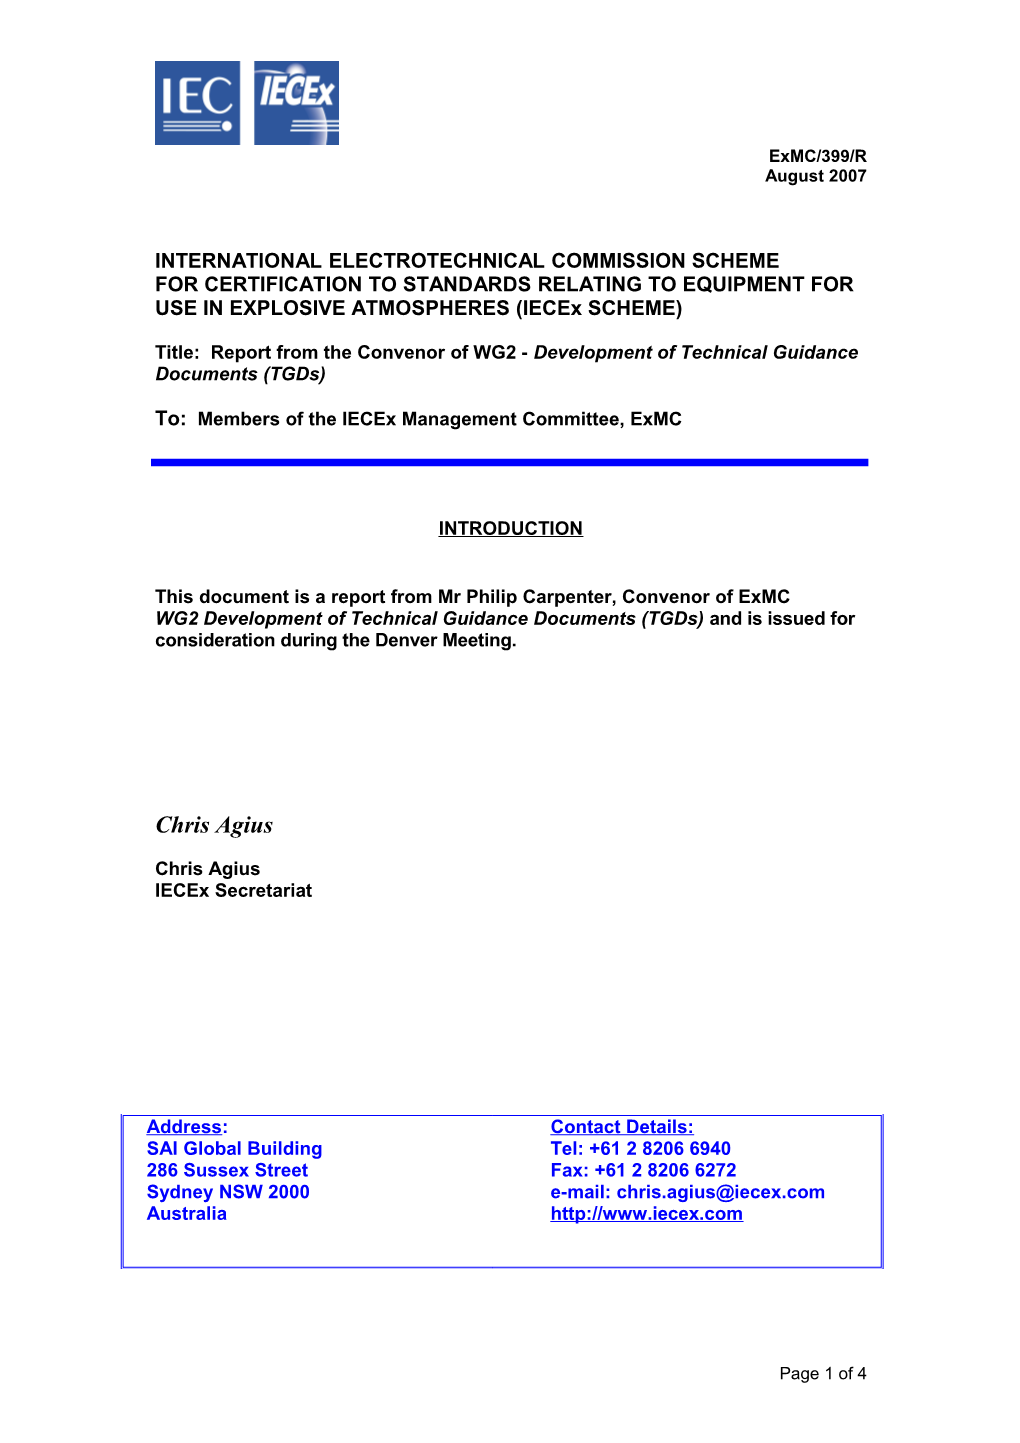 Iecex Exmc WG 2: Technical Guidance Documents